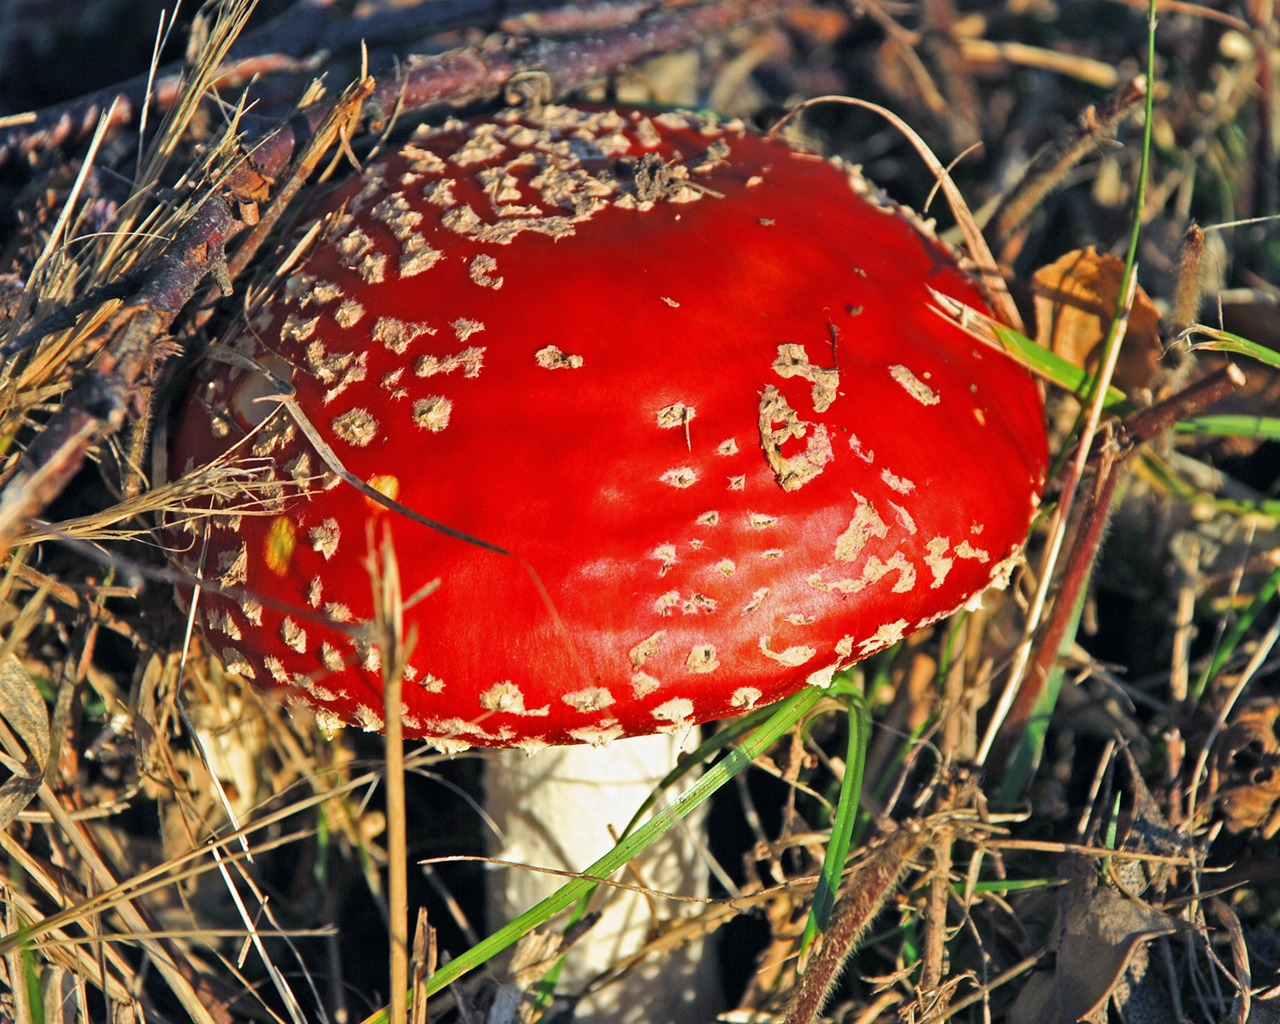 Red Mushroom for 1280 x 1024 resolution